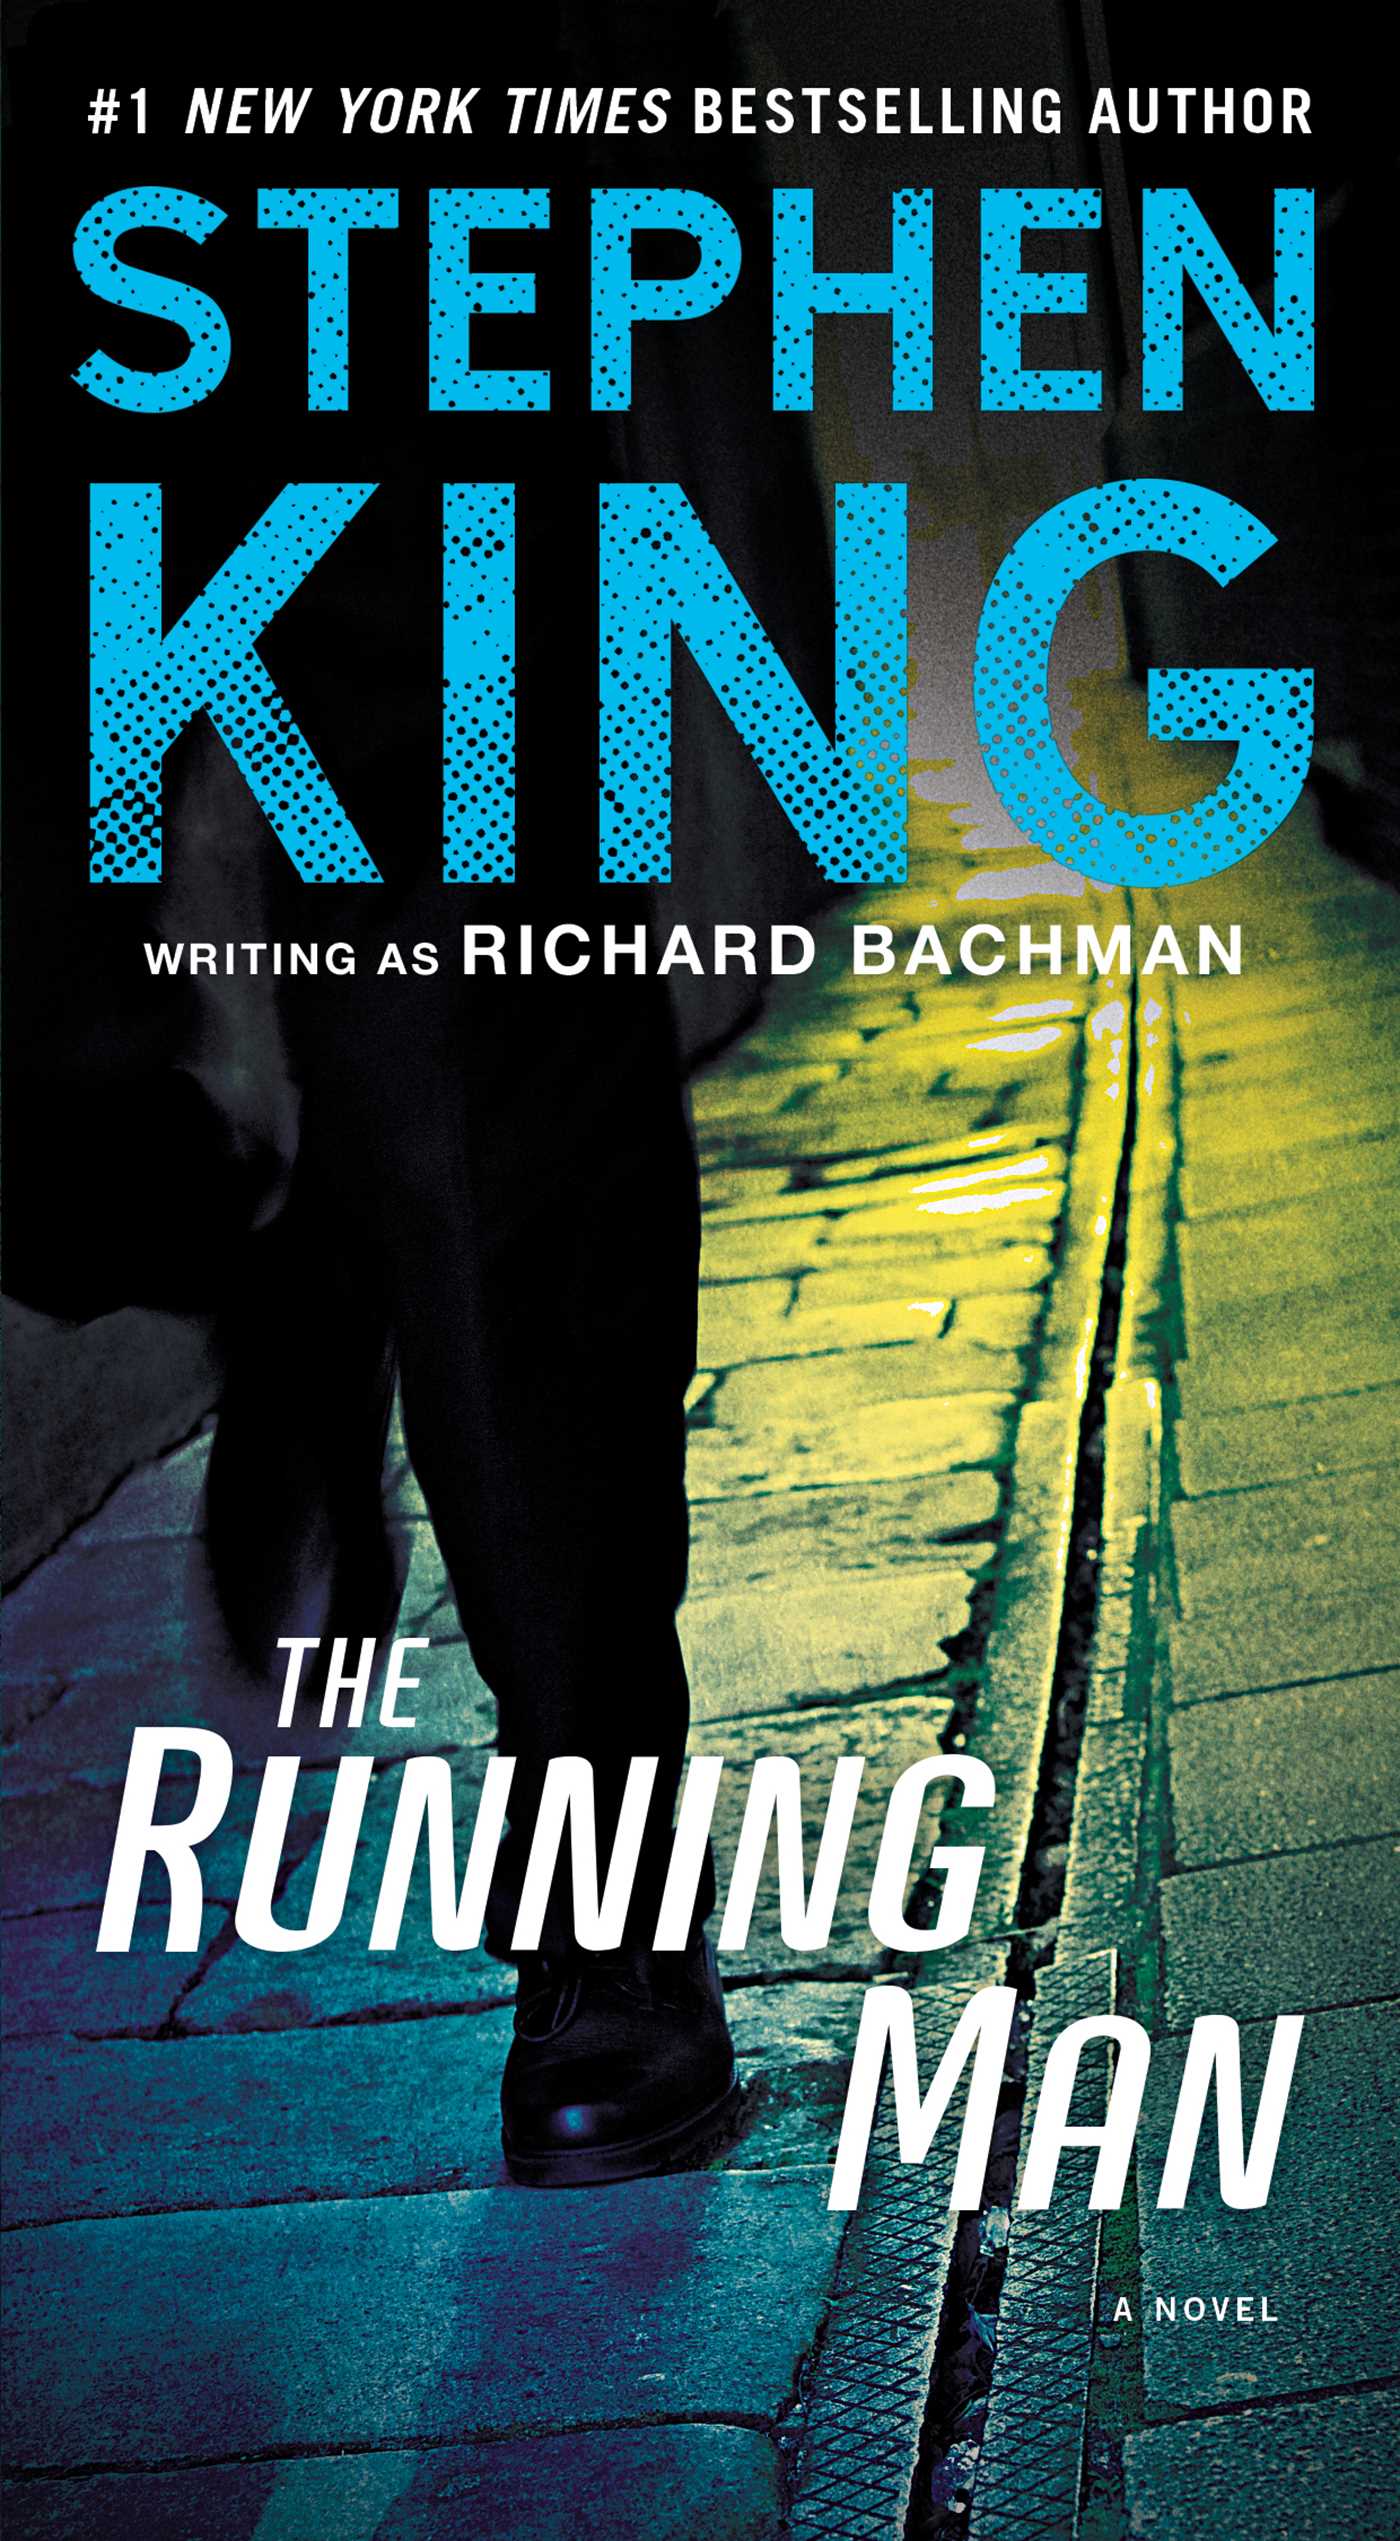 The Running Man (novel)